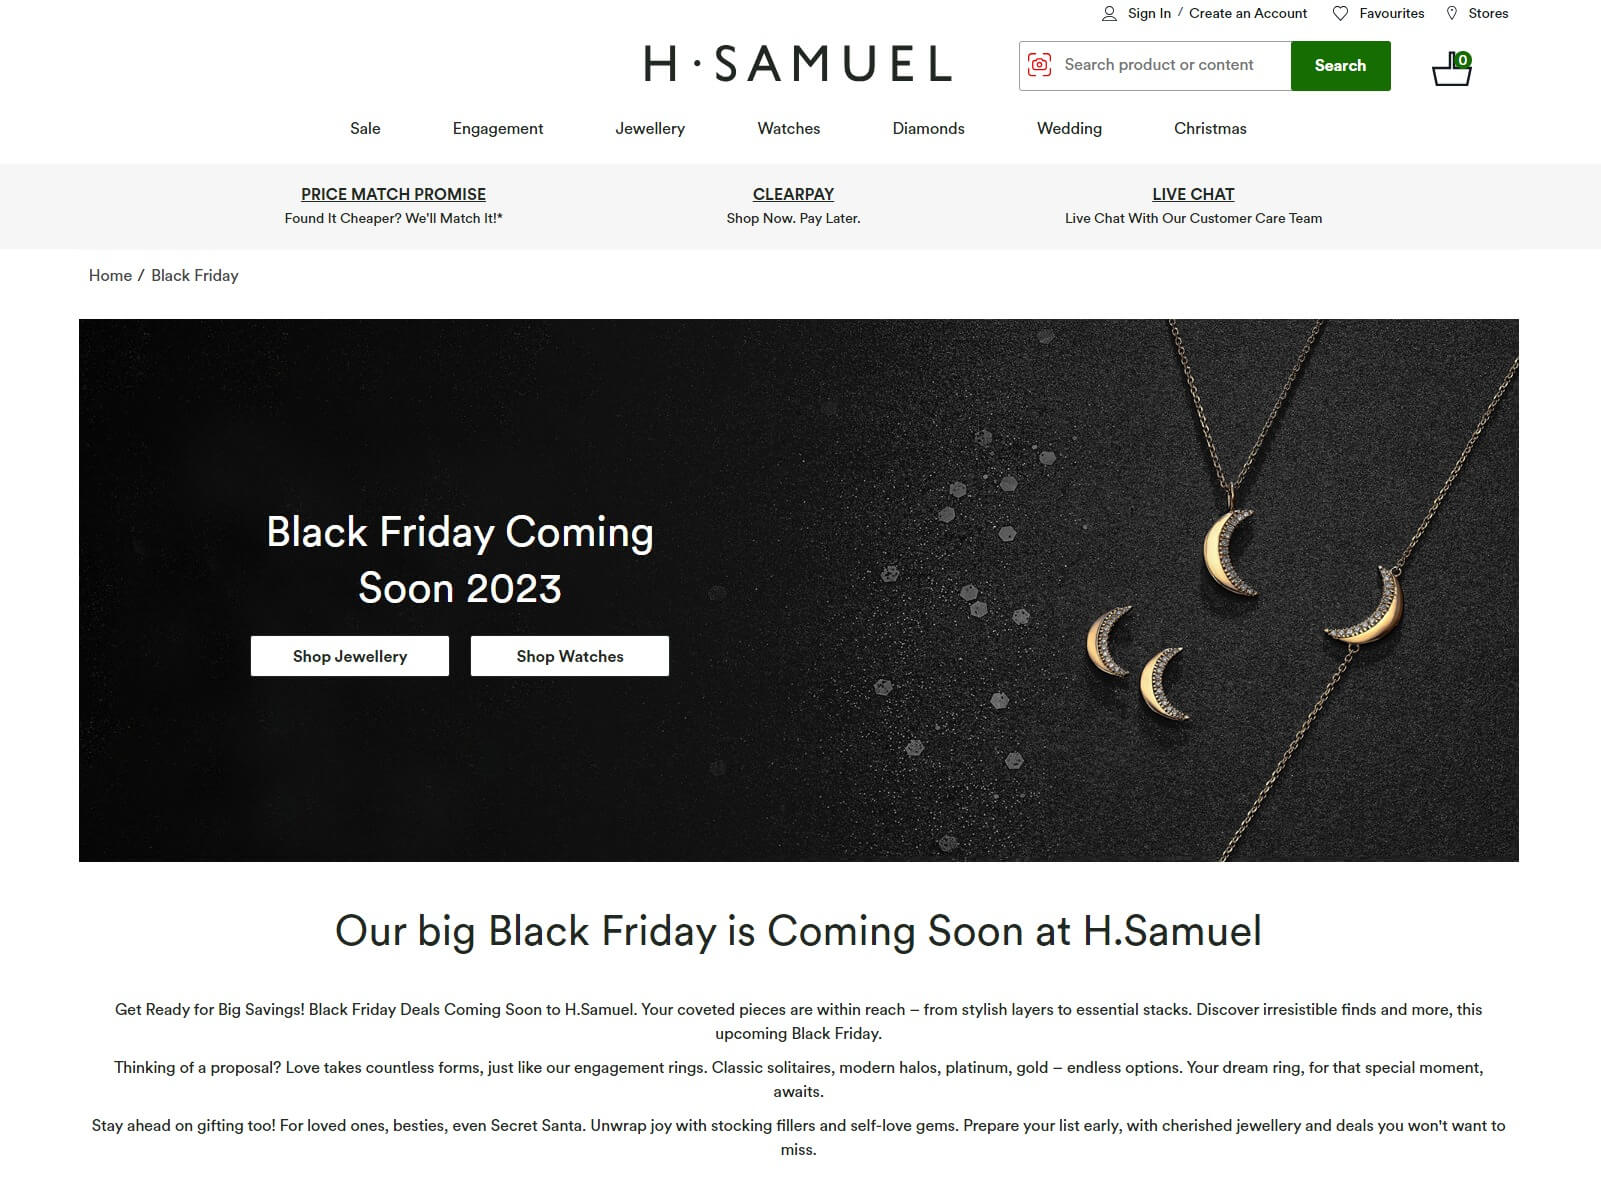 H Samuel Black Friday Page